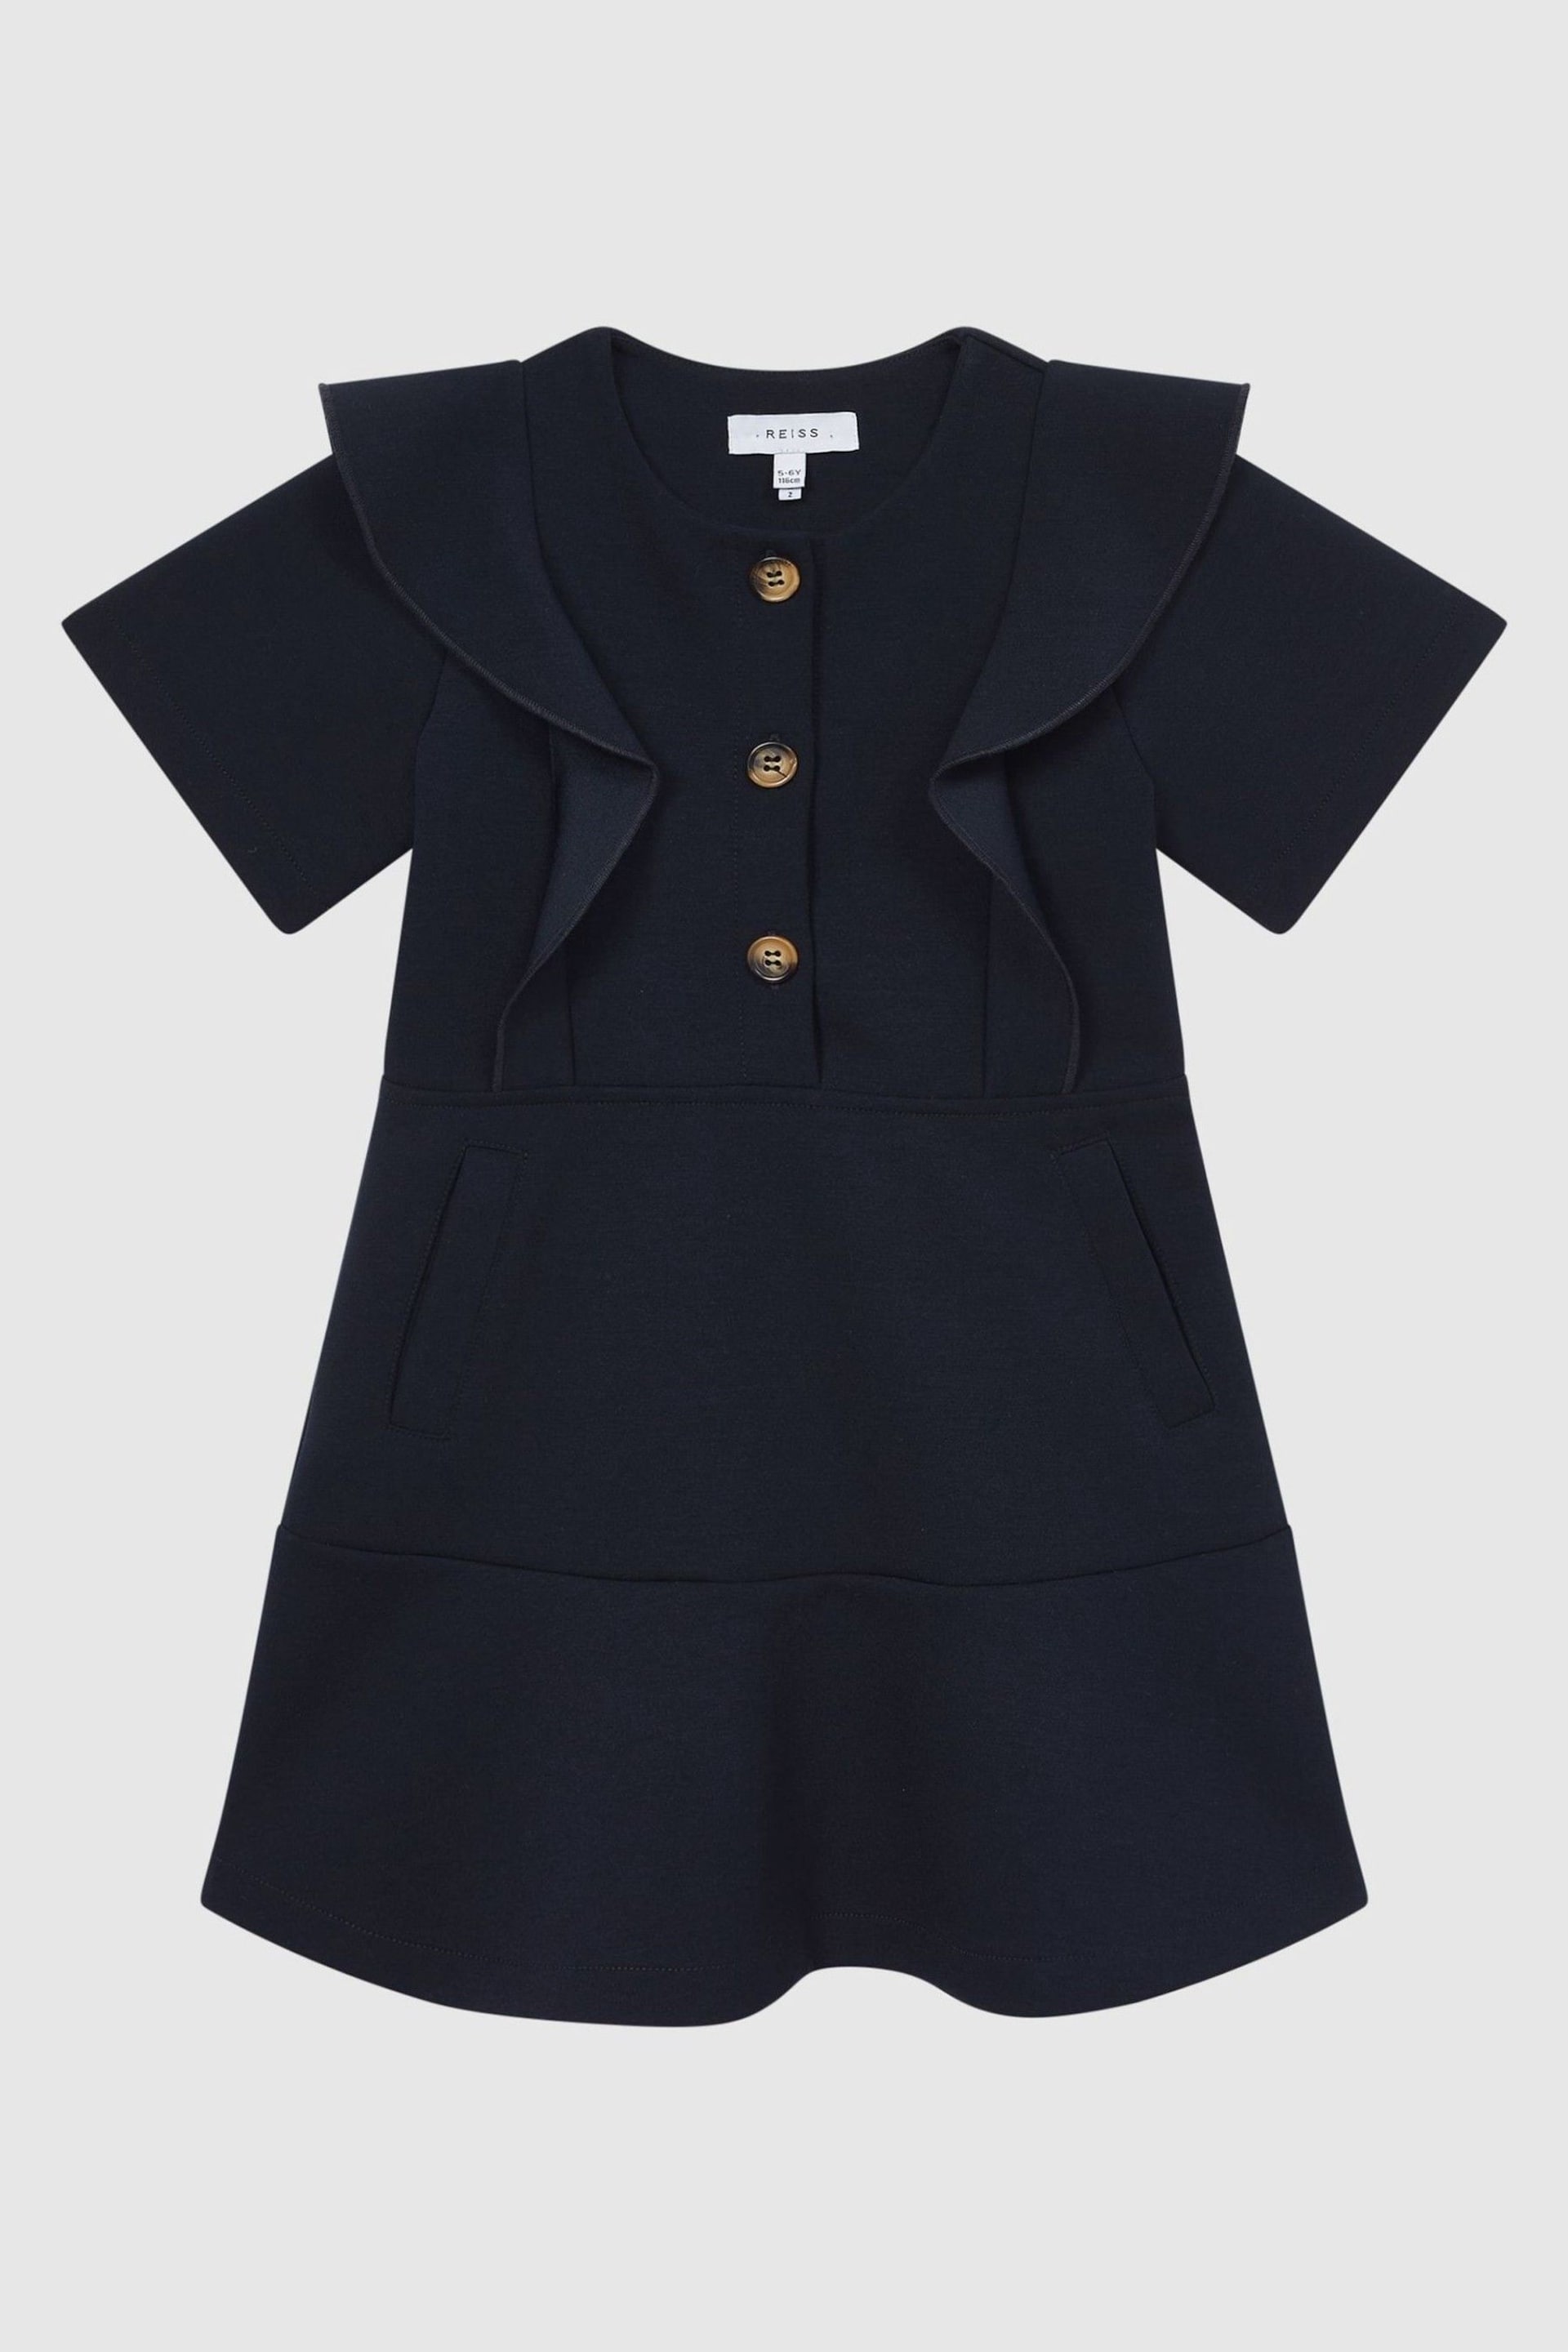 Reiss Navy Fearne Junior Ruffle Sleeve Button Dress - Image 2 of 7